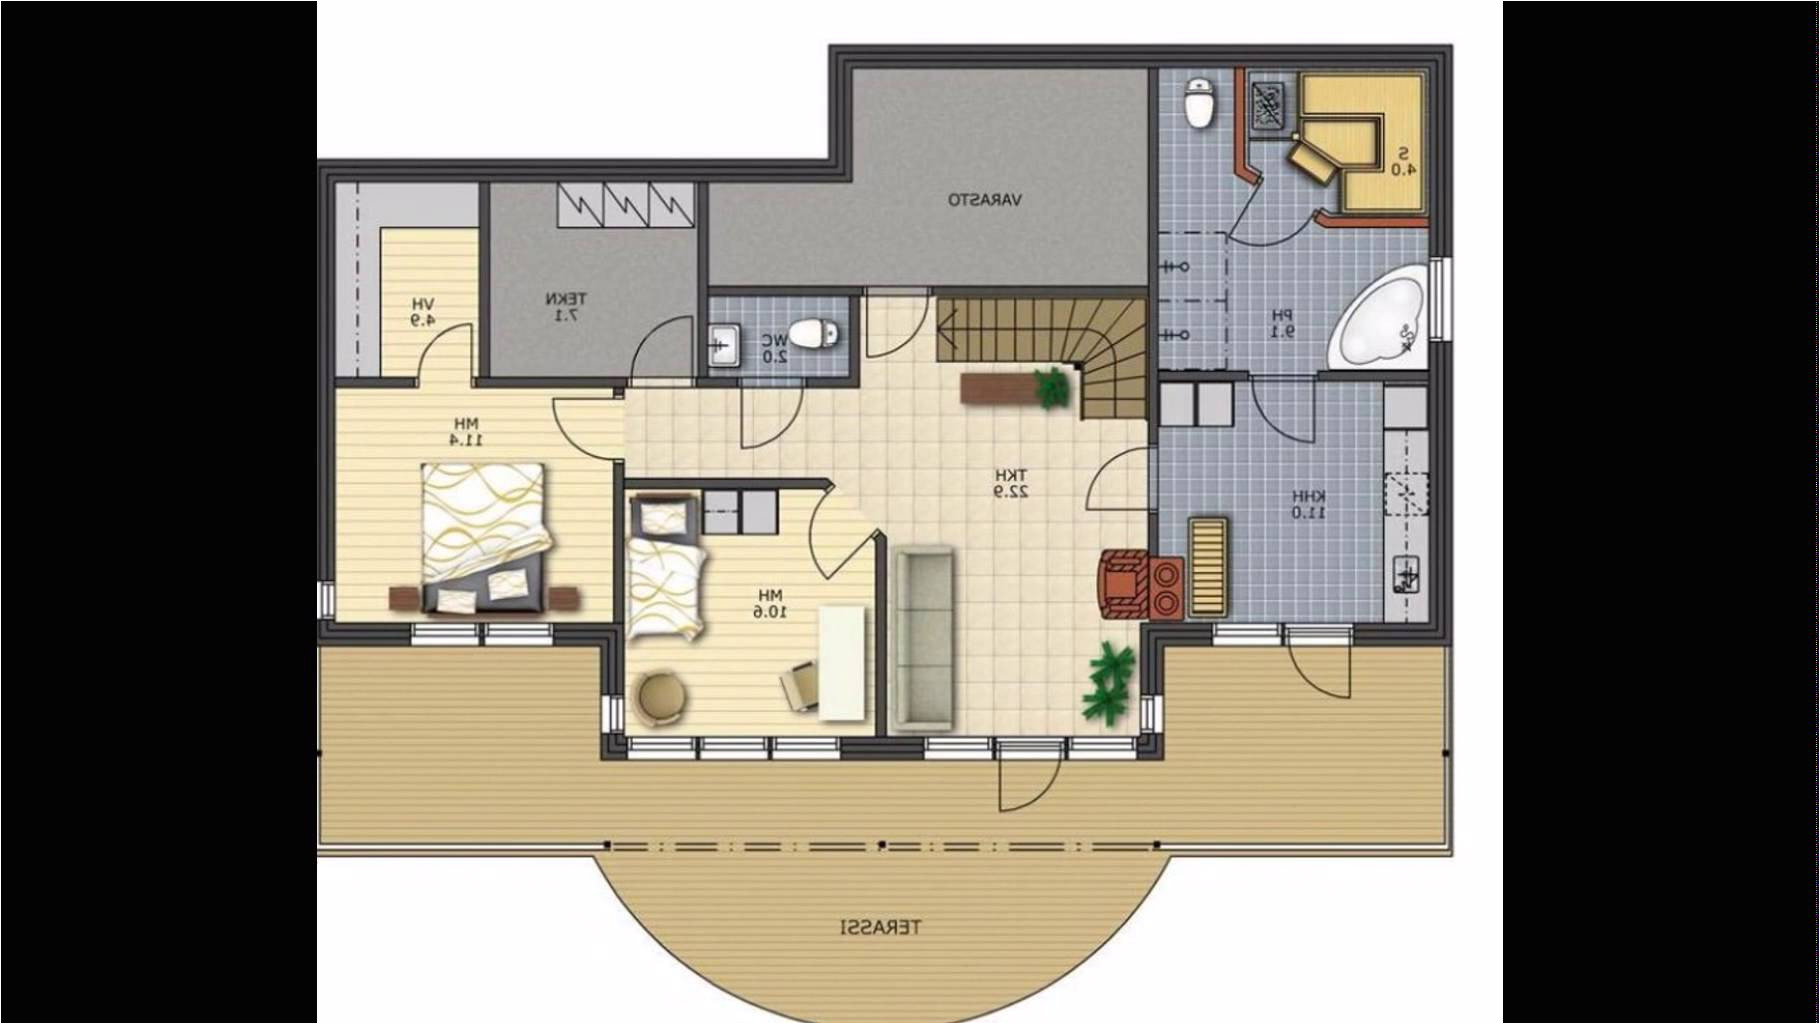 3 bedroom modern house plans jessica nilsson